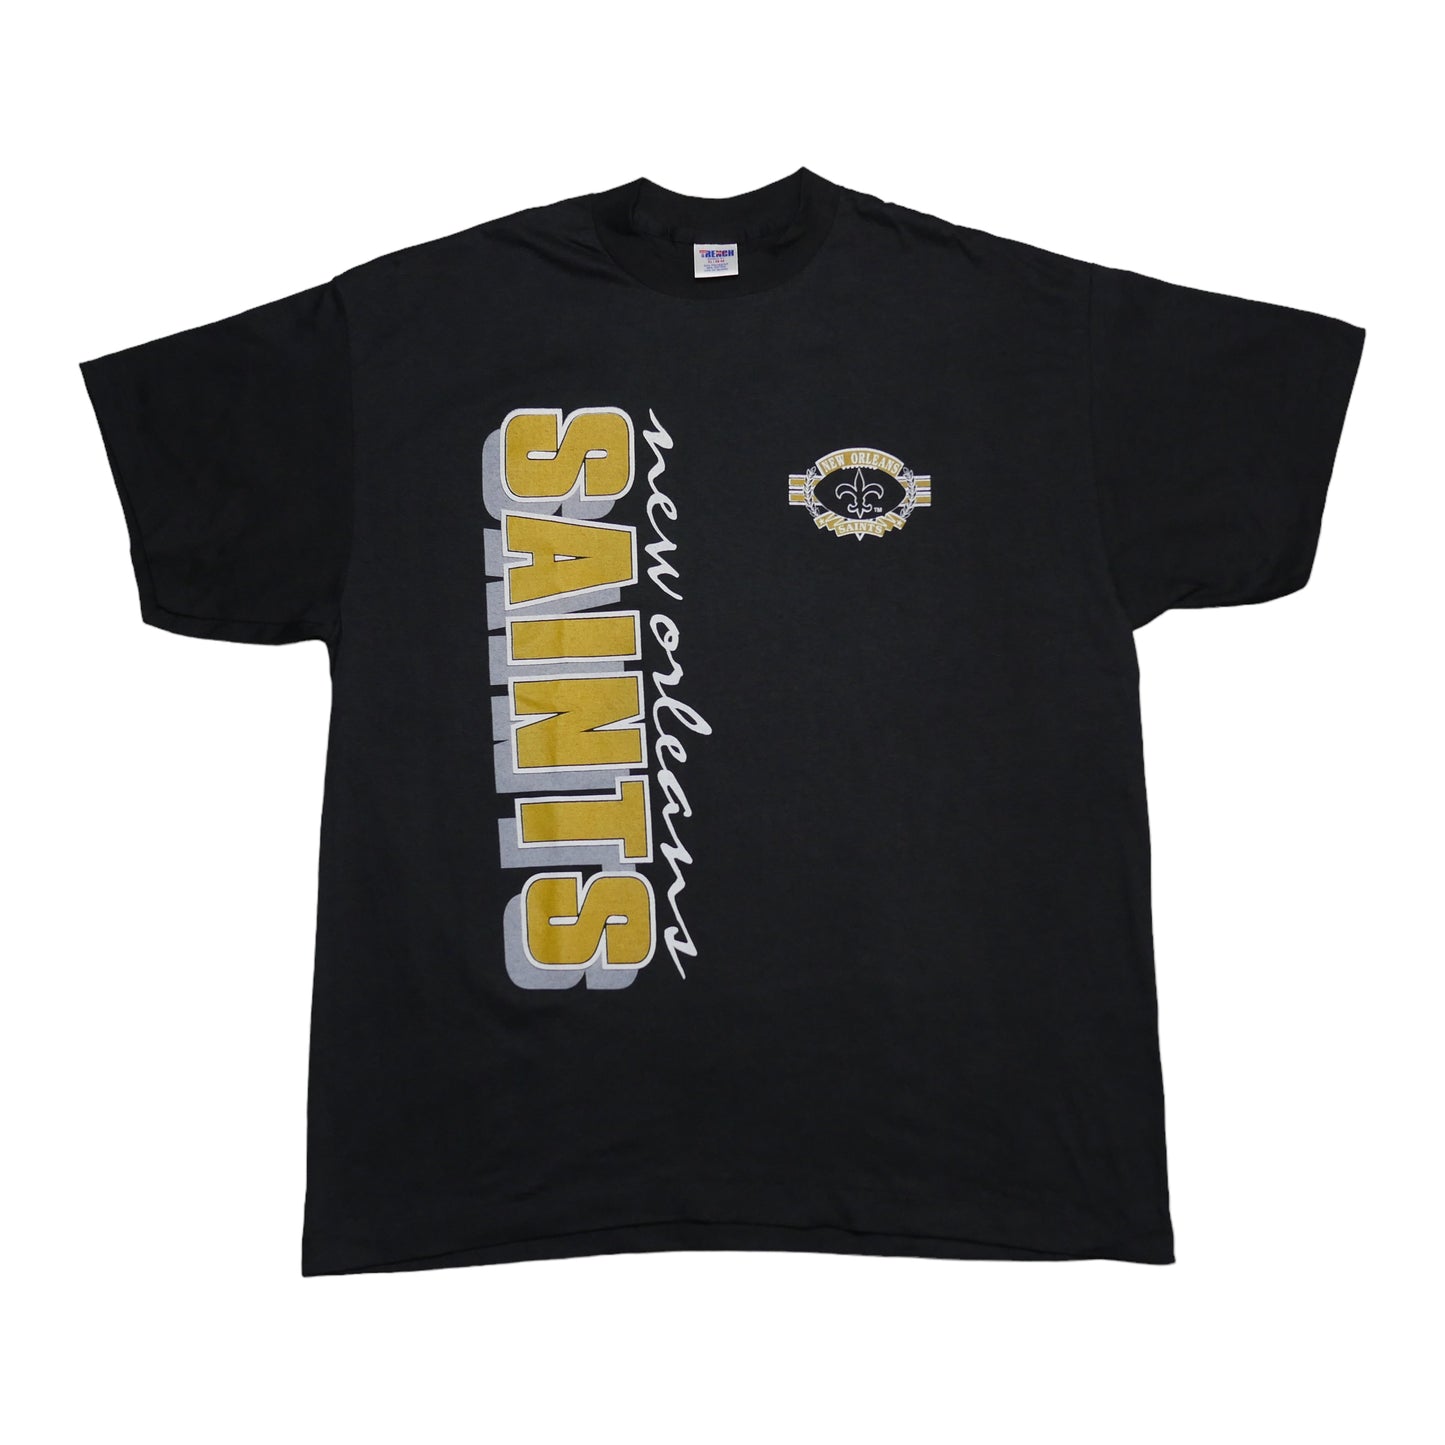 New Orleans Saints Shirt - XL